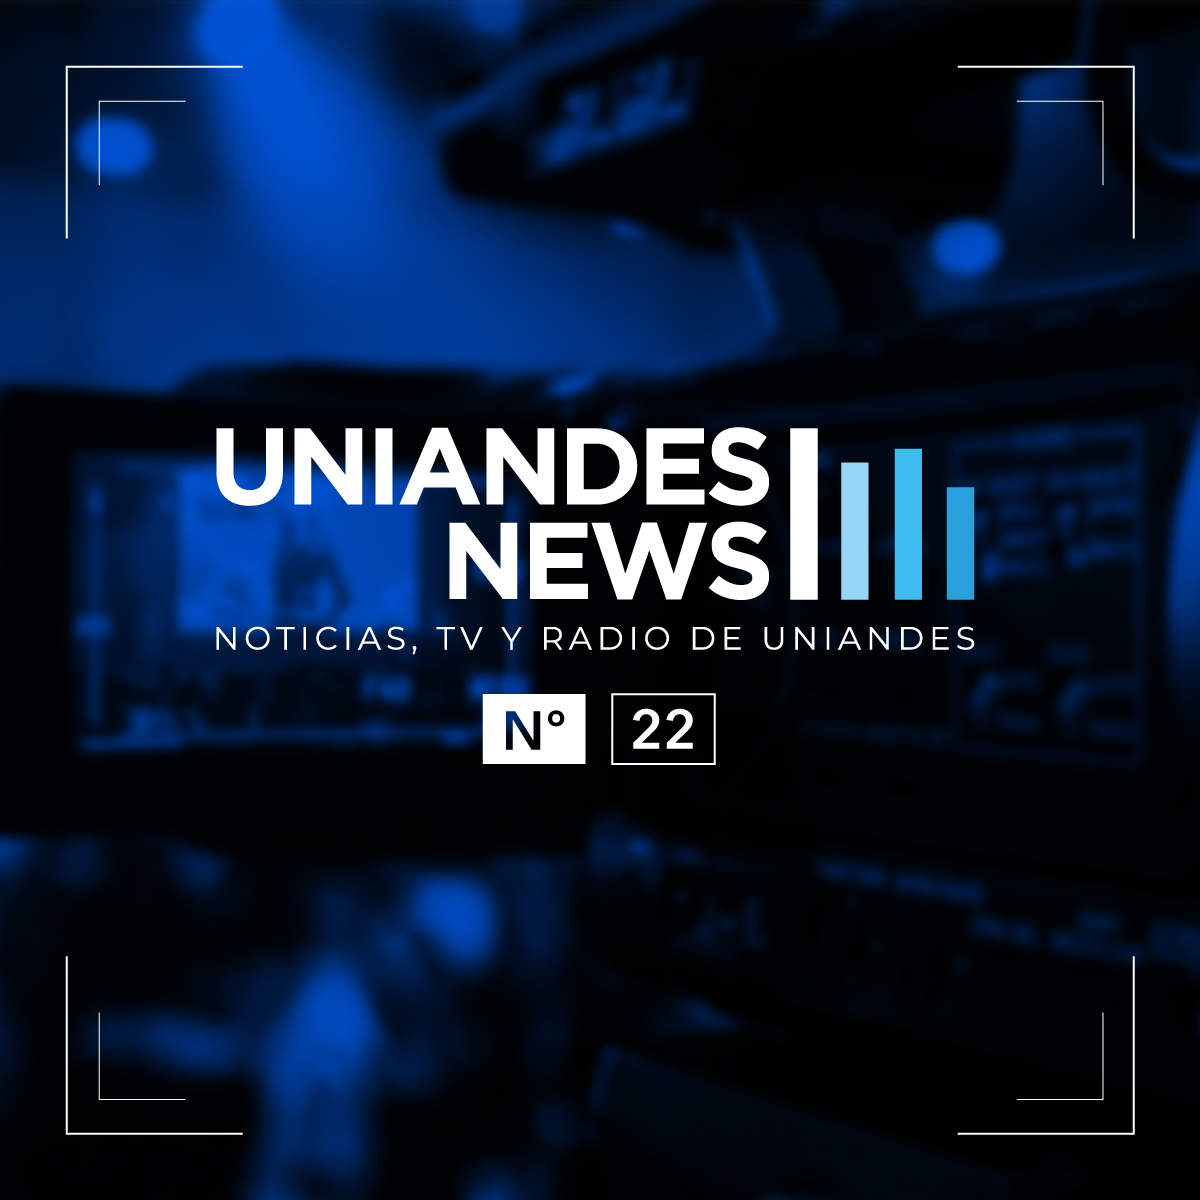 Uniandes news 22